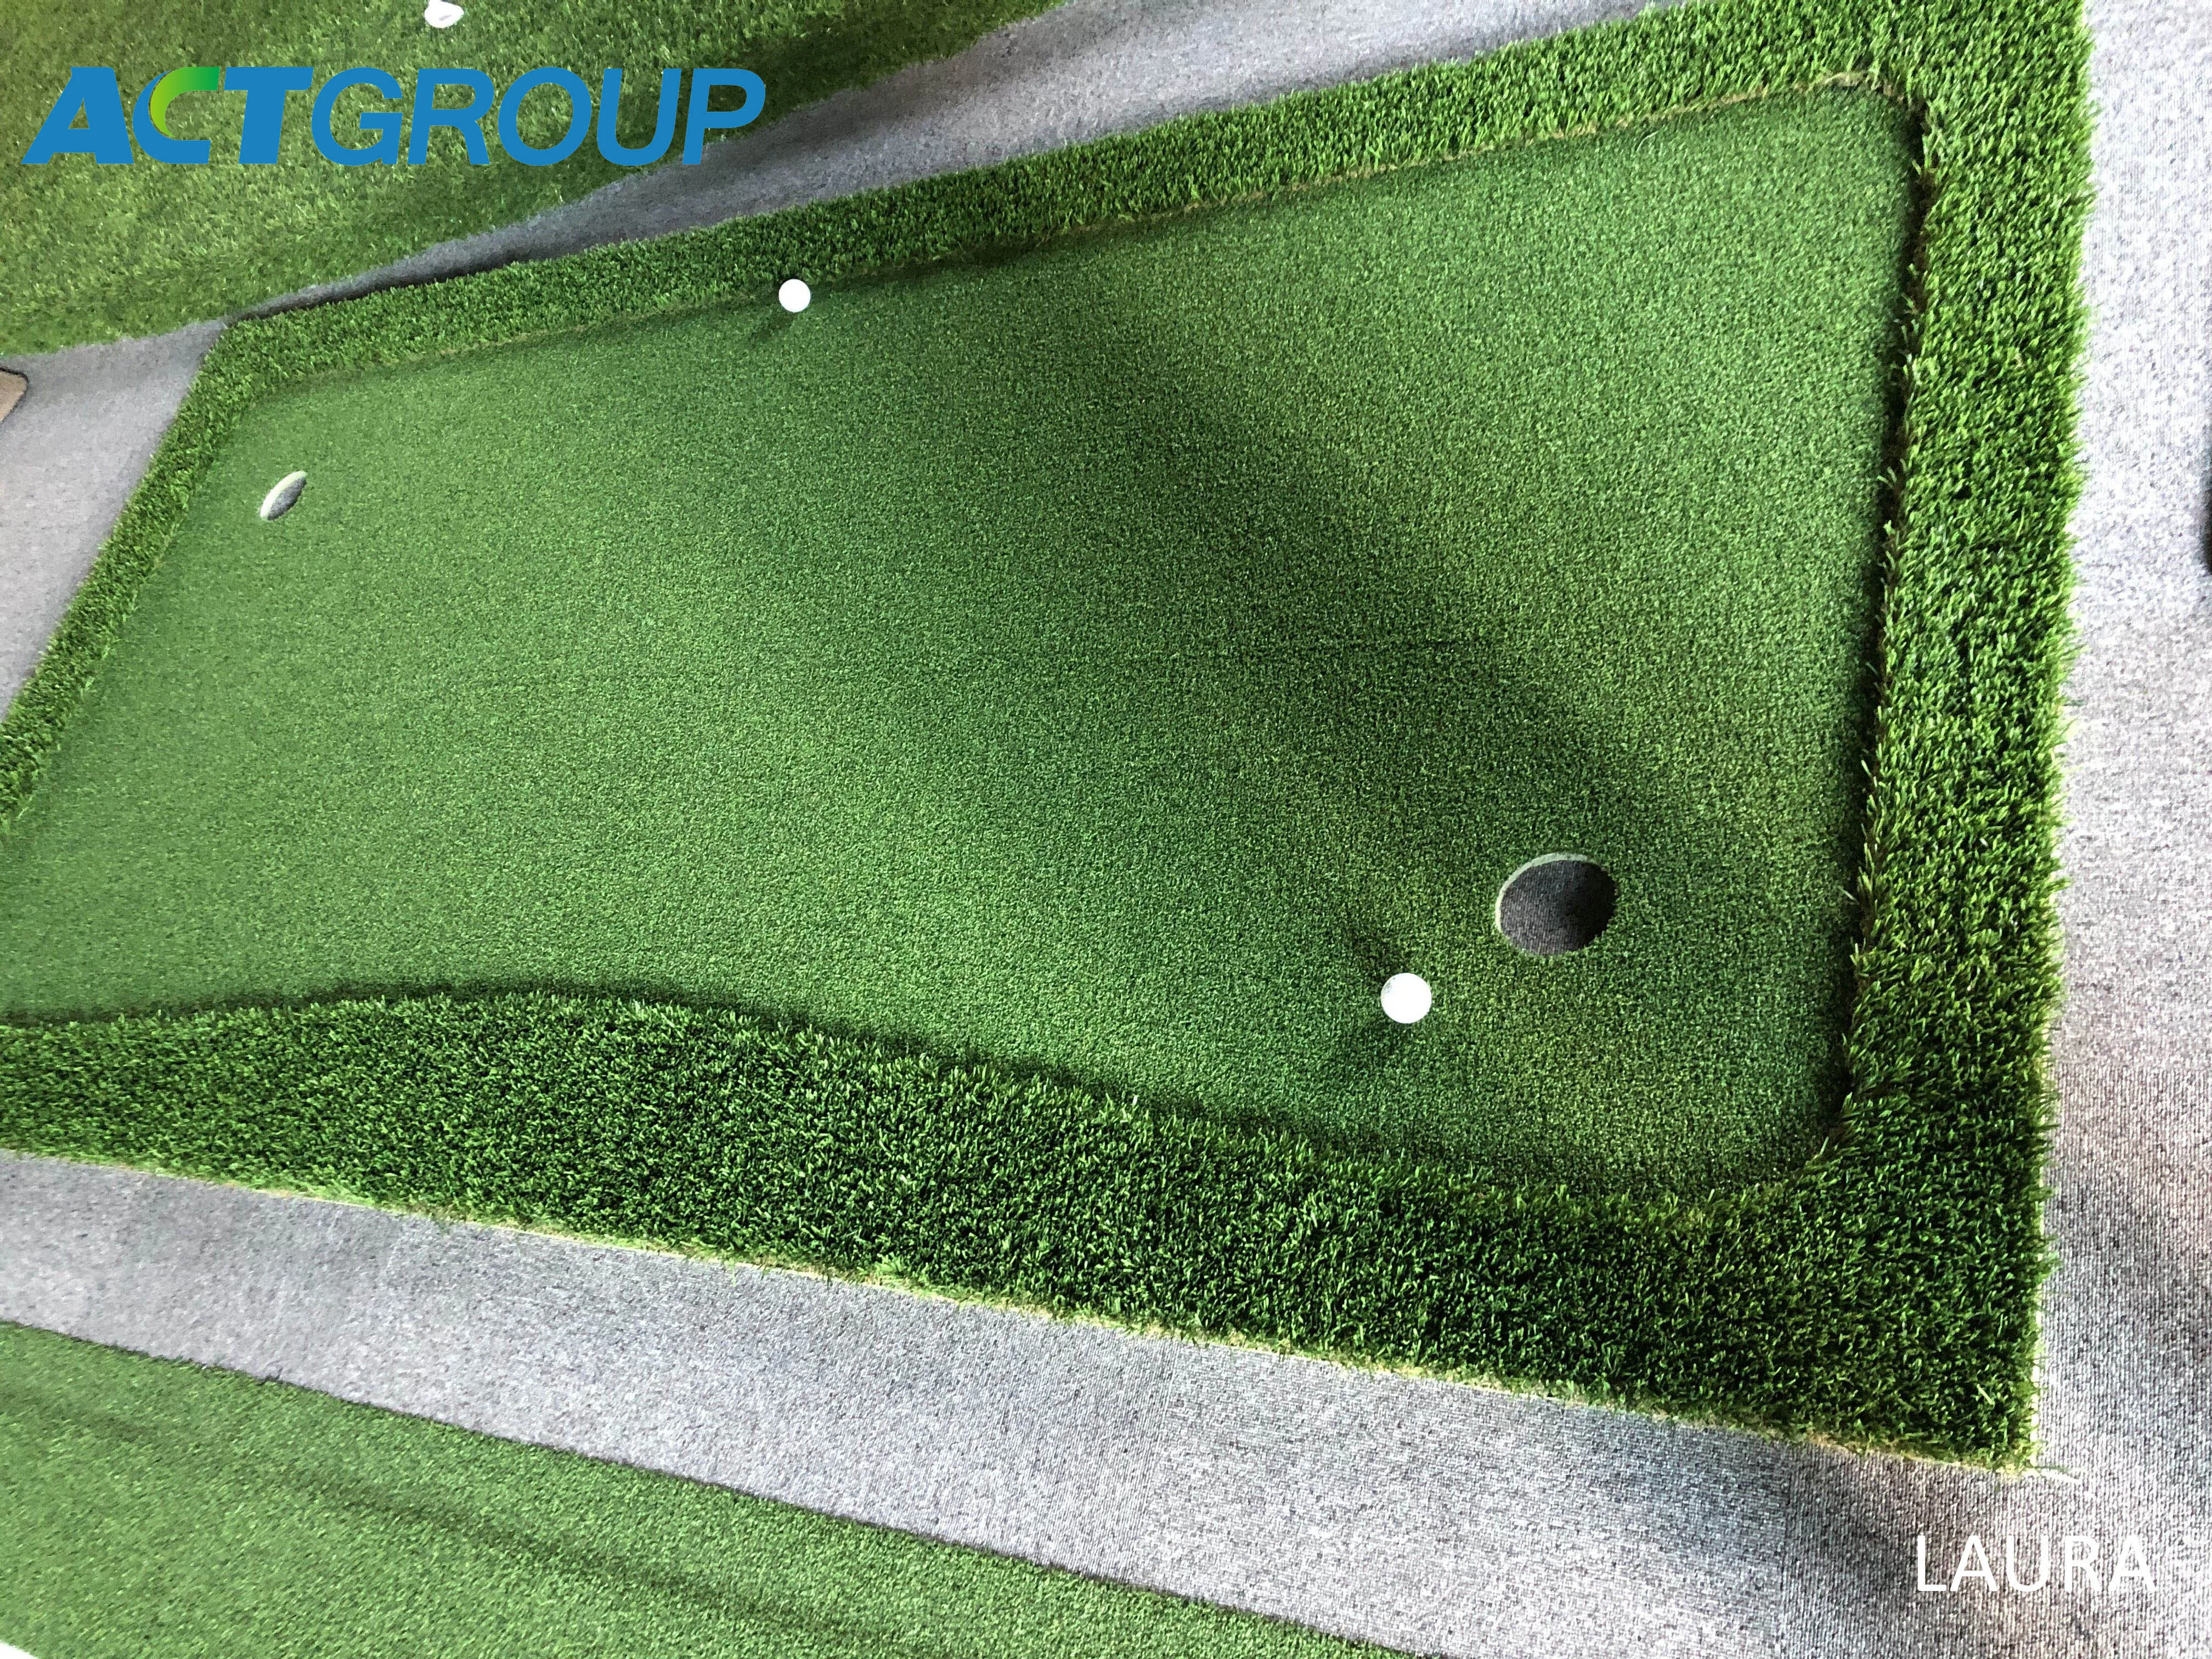 2 in 1 Golf training artificial grass mat  golf hitting pad for Outdoor Home Backyard  2MX3M